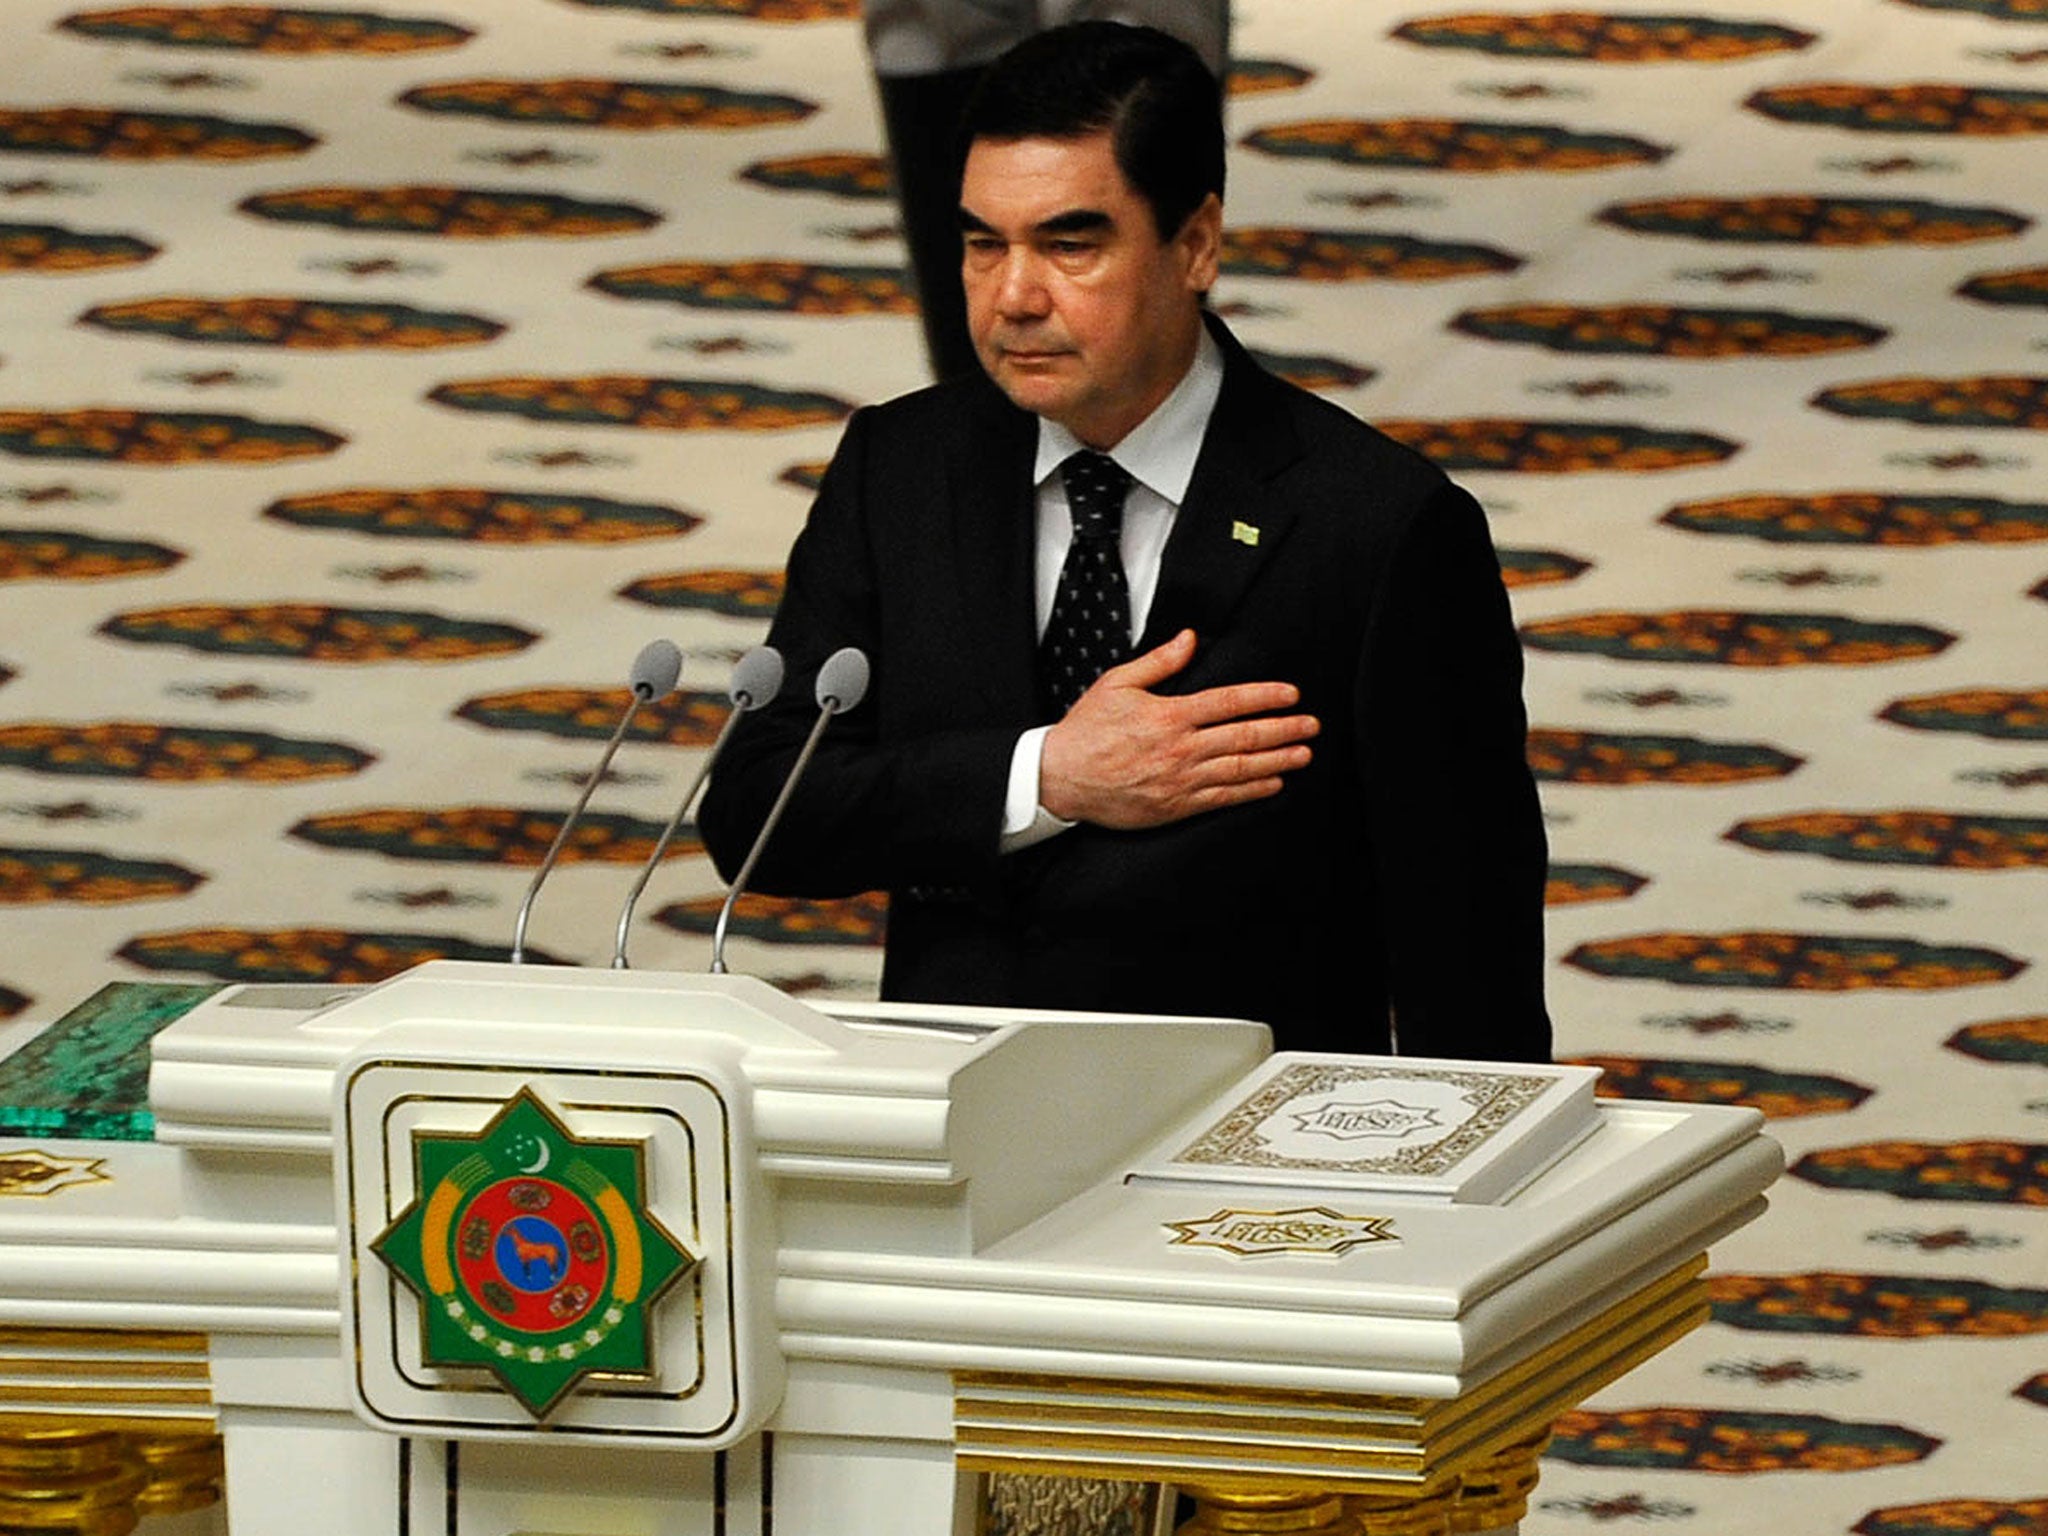 Turkmenistan's president Gurbanguly Berdimuhamedow swears an oath during his inauguration as President in Ashgabad on February 17, 2017